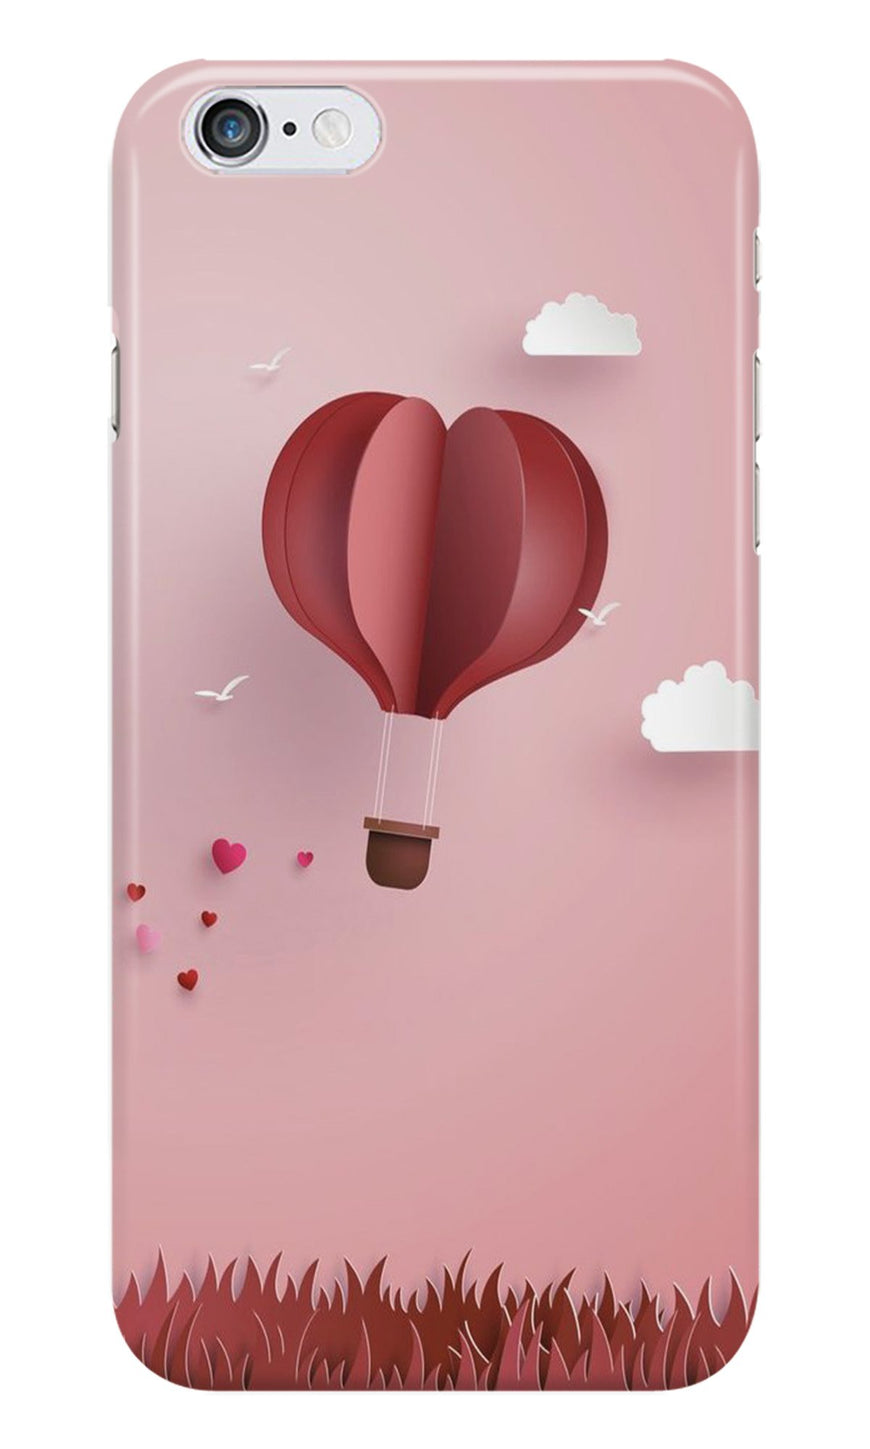 Parachute Case for Iphone 6/6S (Design No. 286)